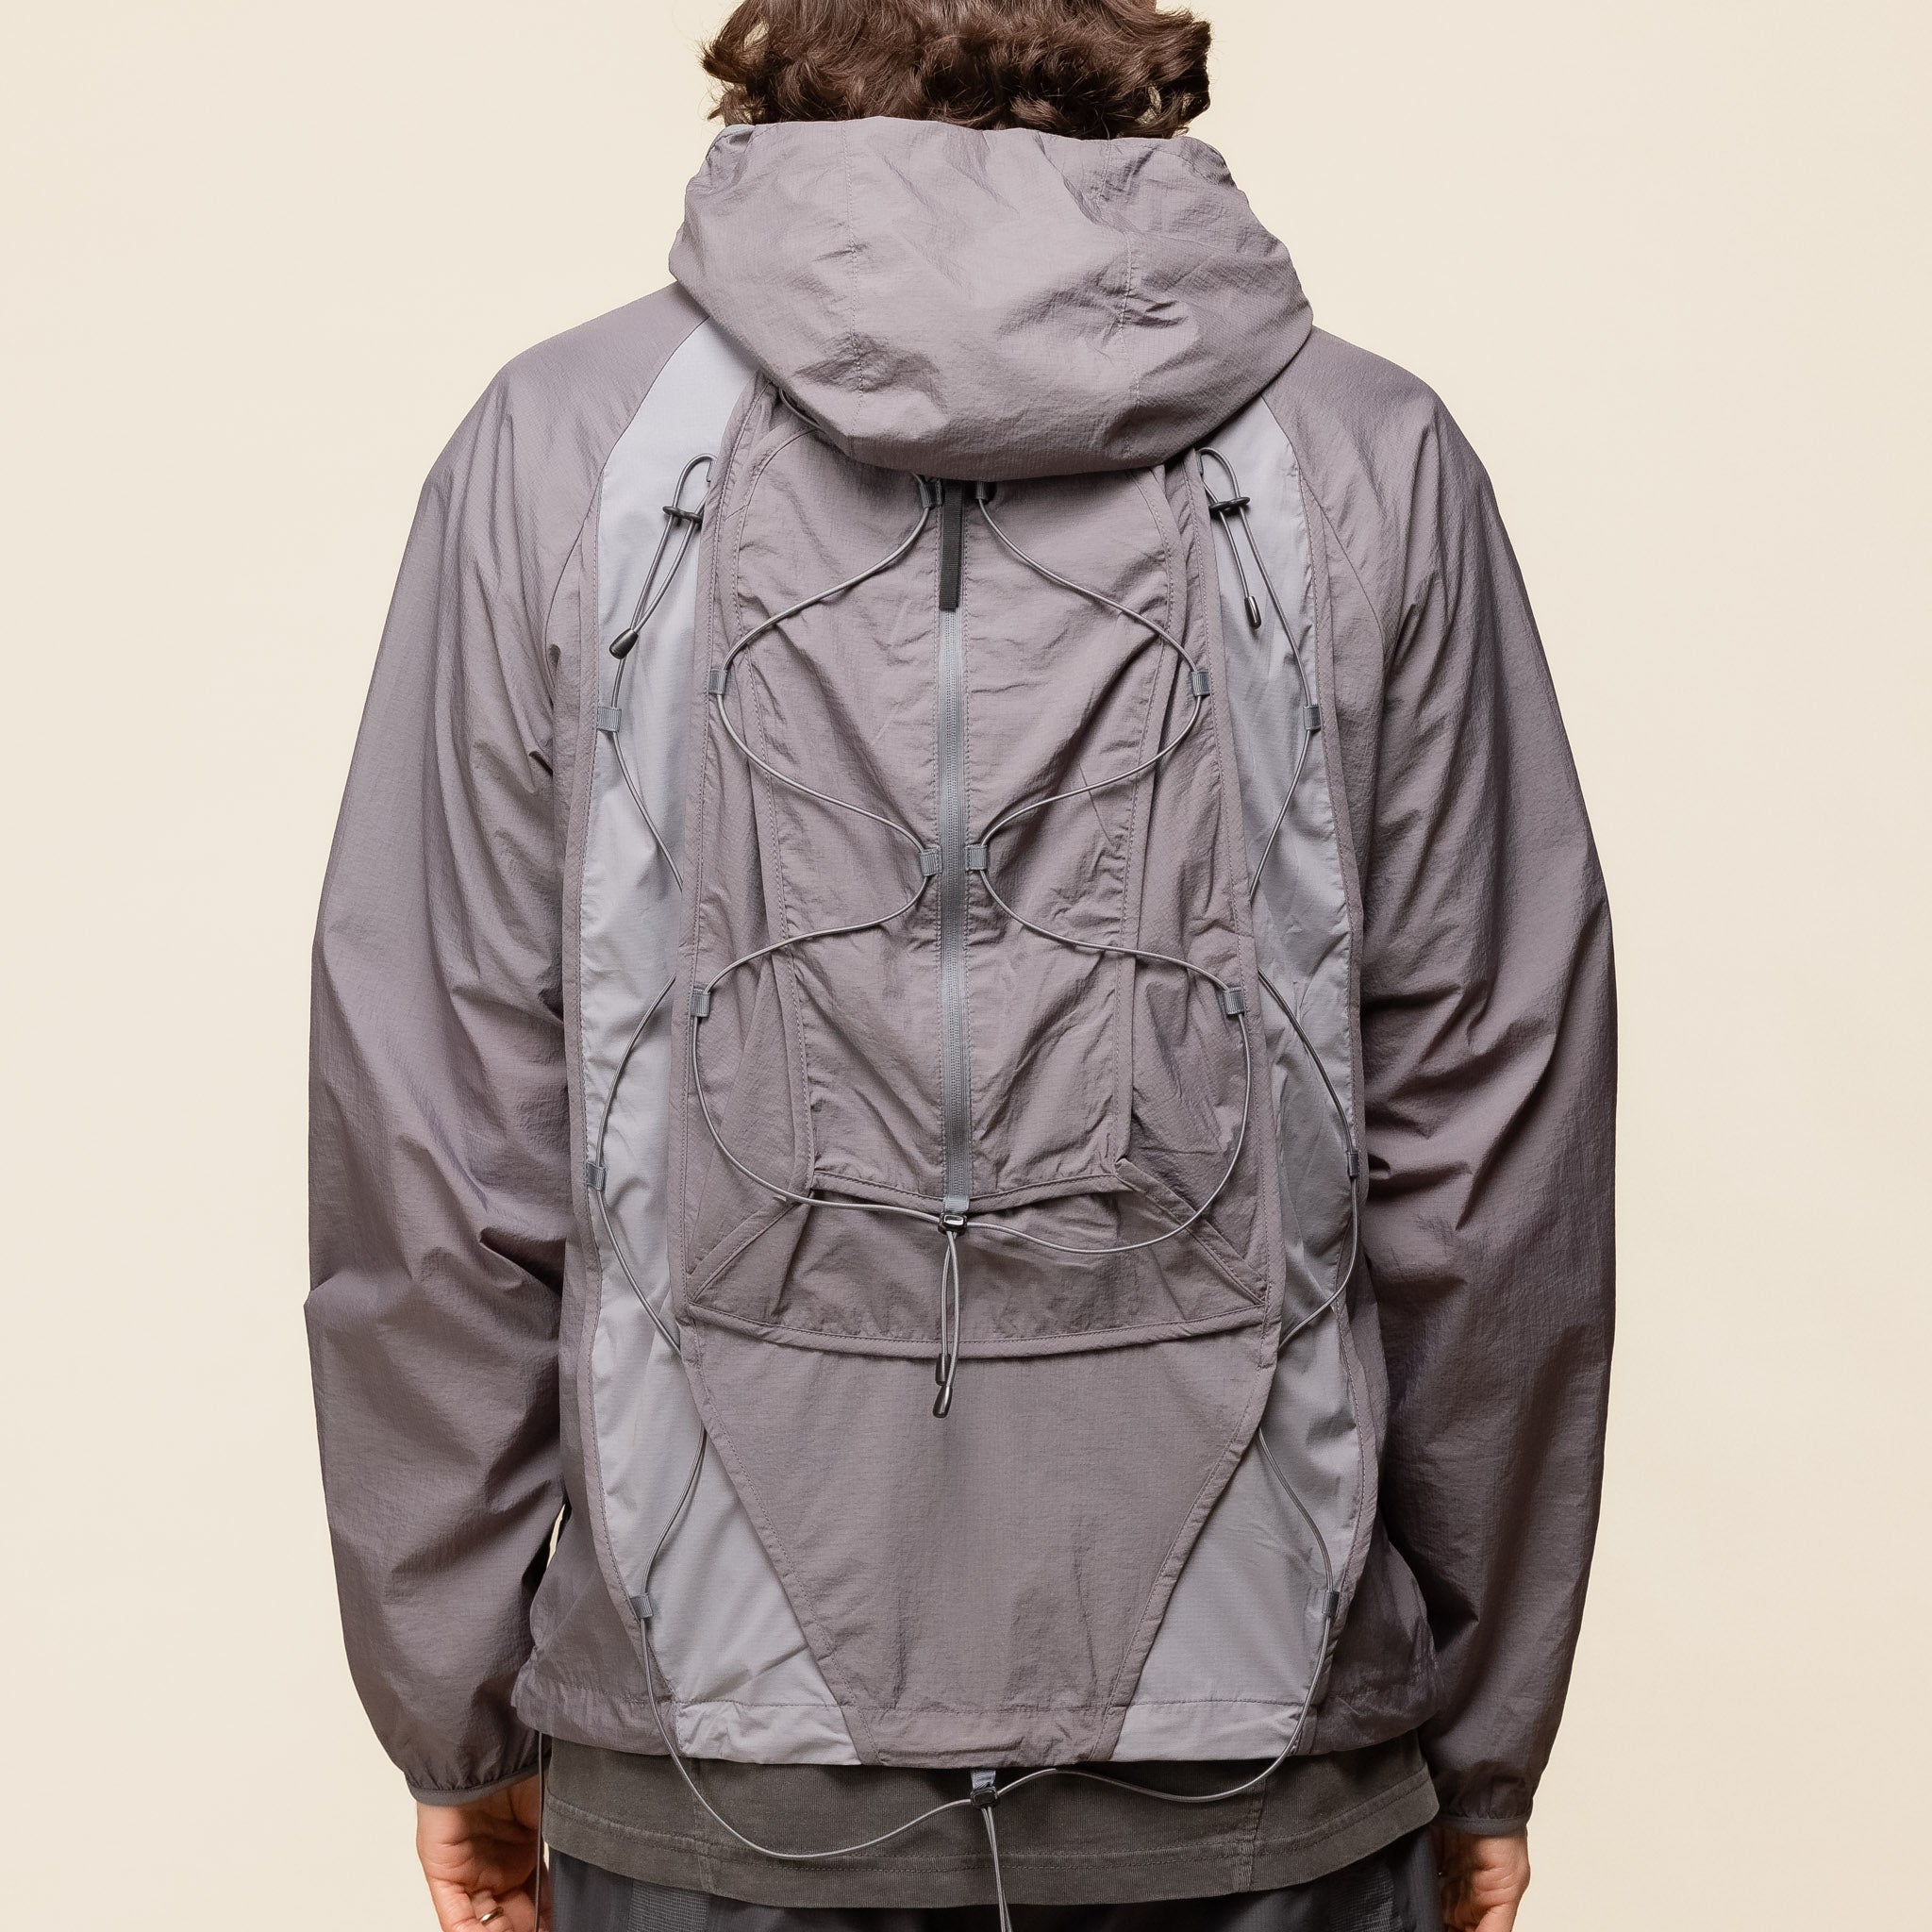 VNGROCOMTHA San San Gear - Backpack Jacket - Grey